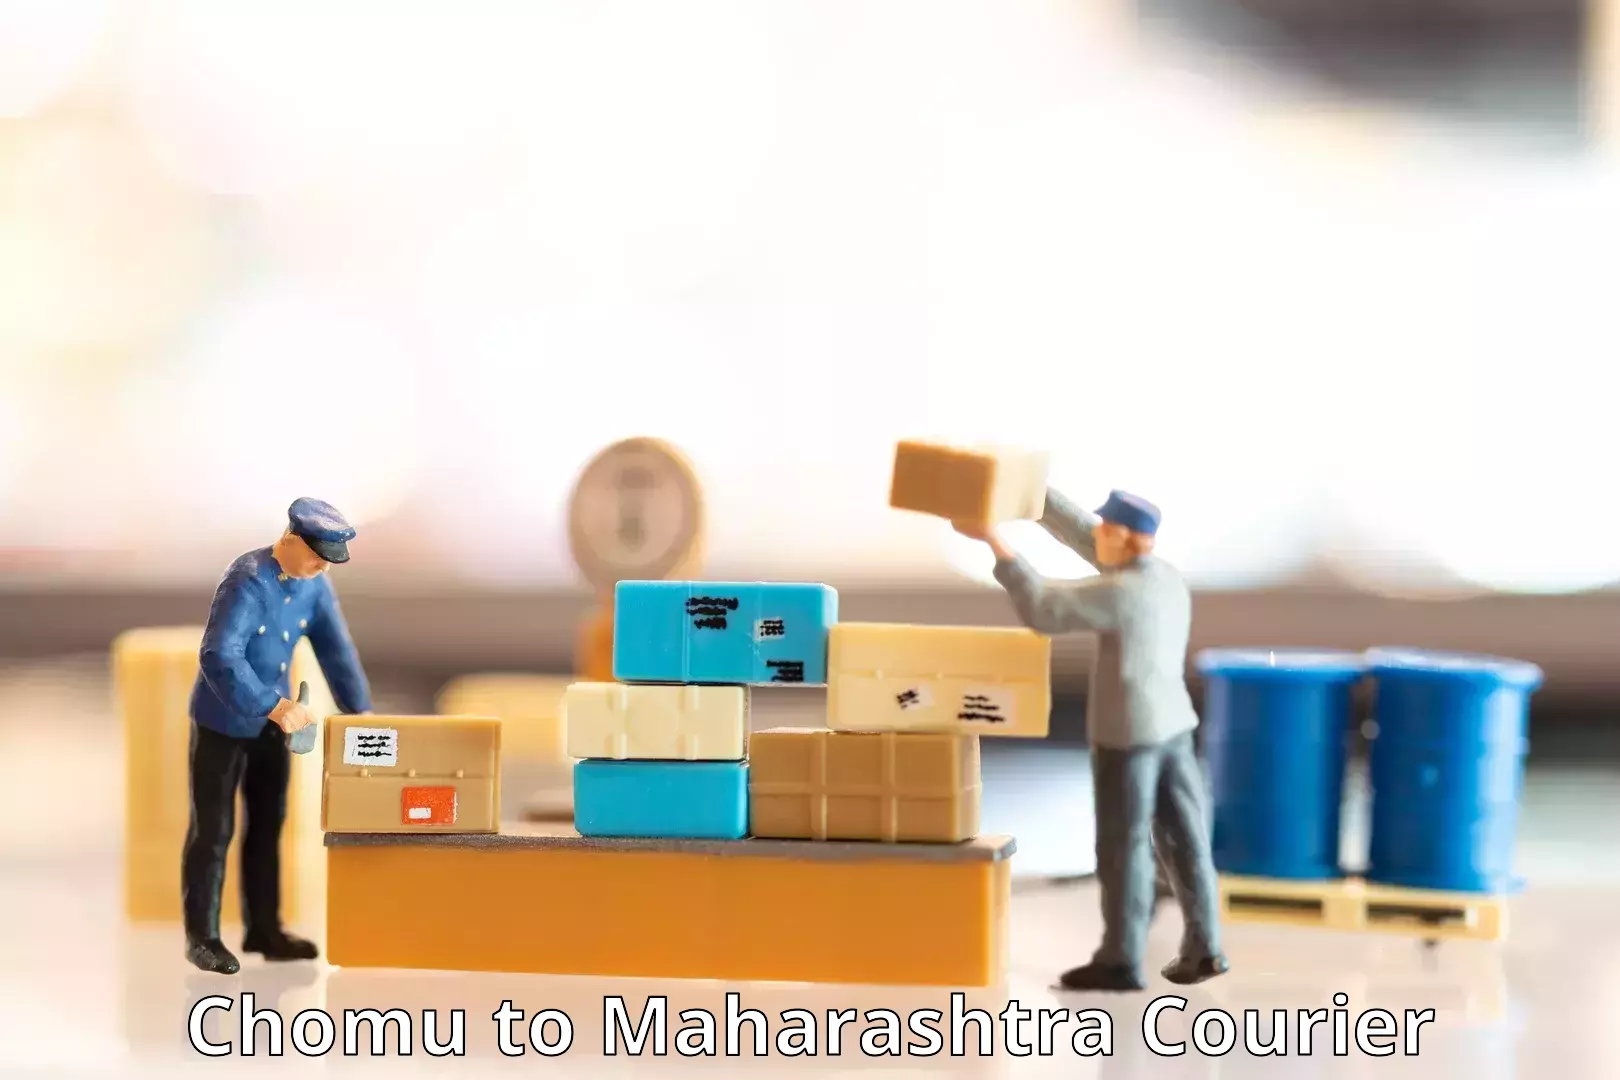 Cash on delivery service Chomu to Maharashtra